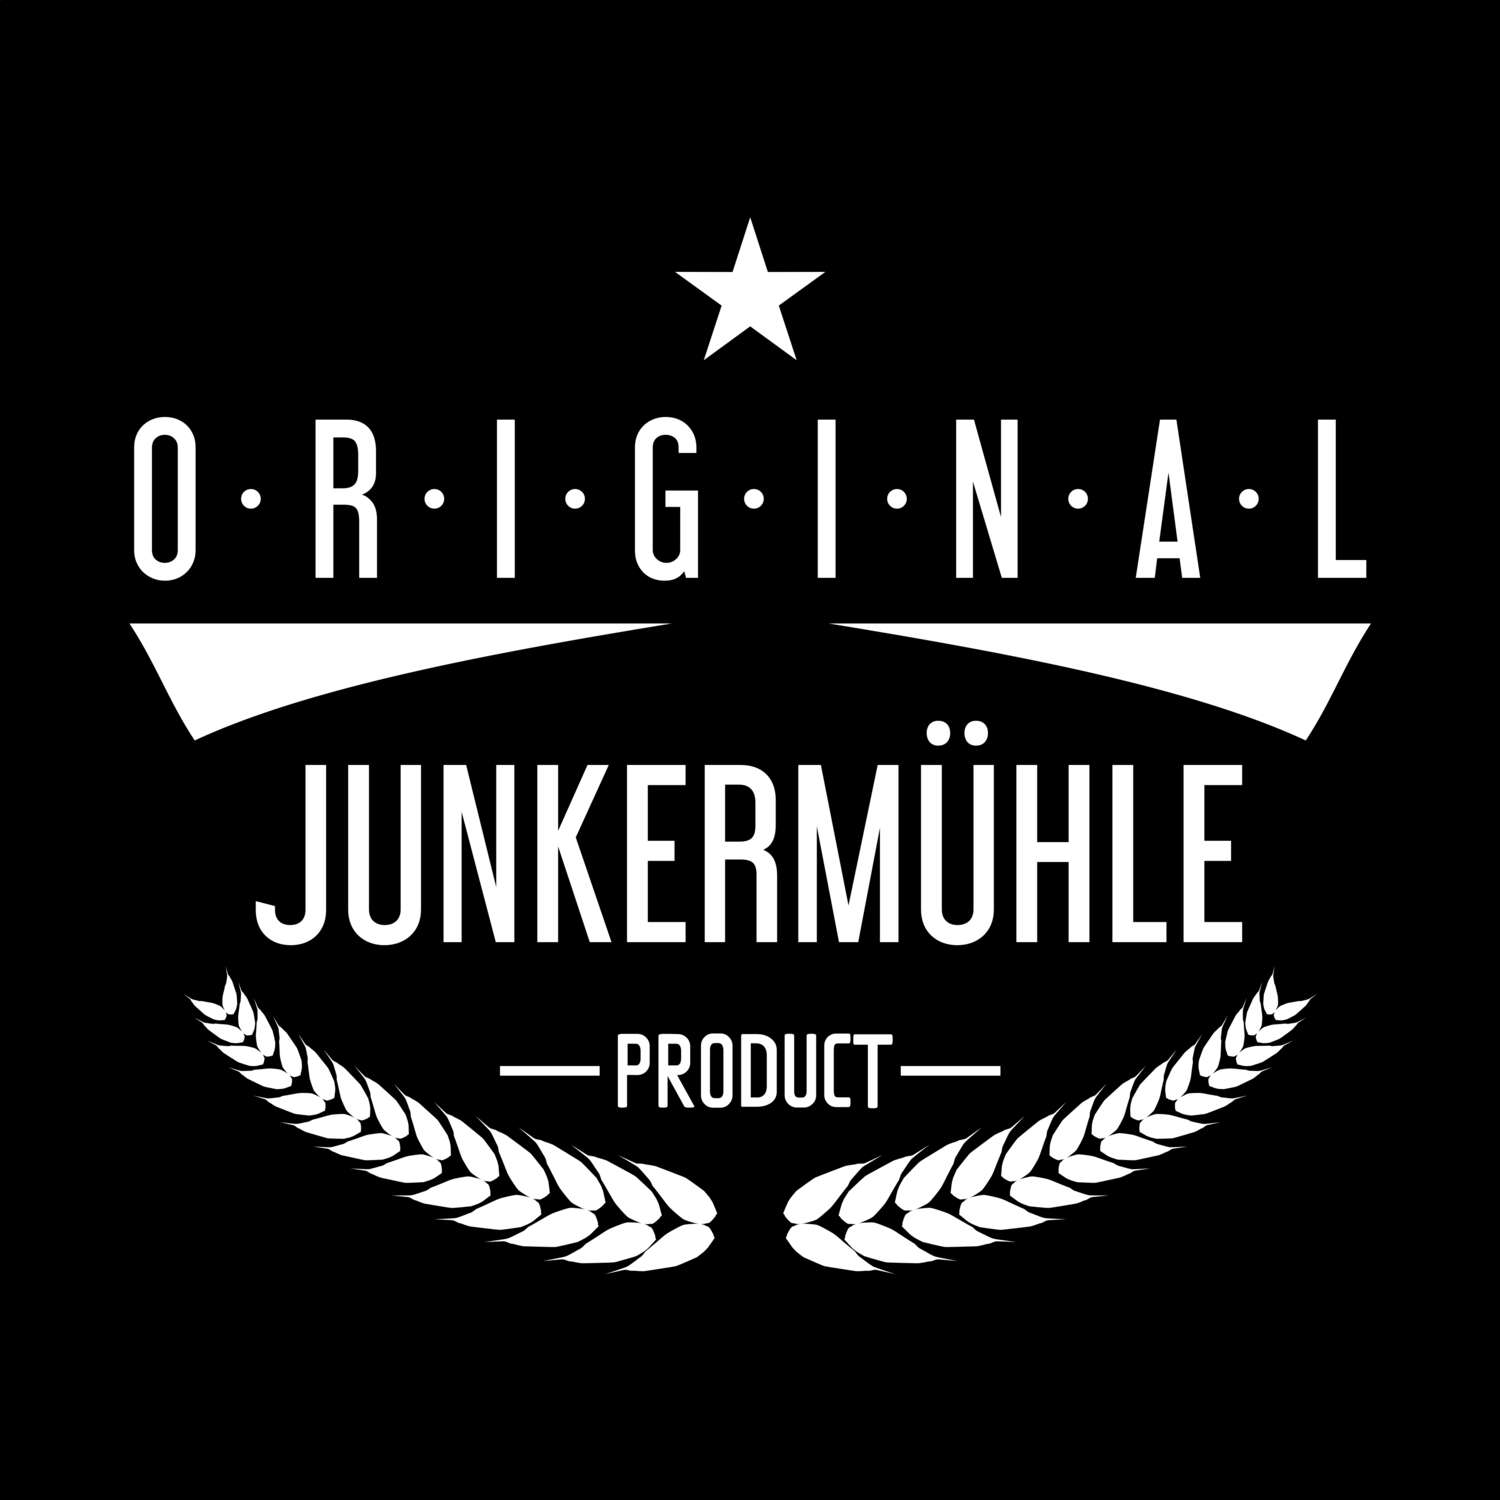 Junkermühle T-Shirt »Original Product«